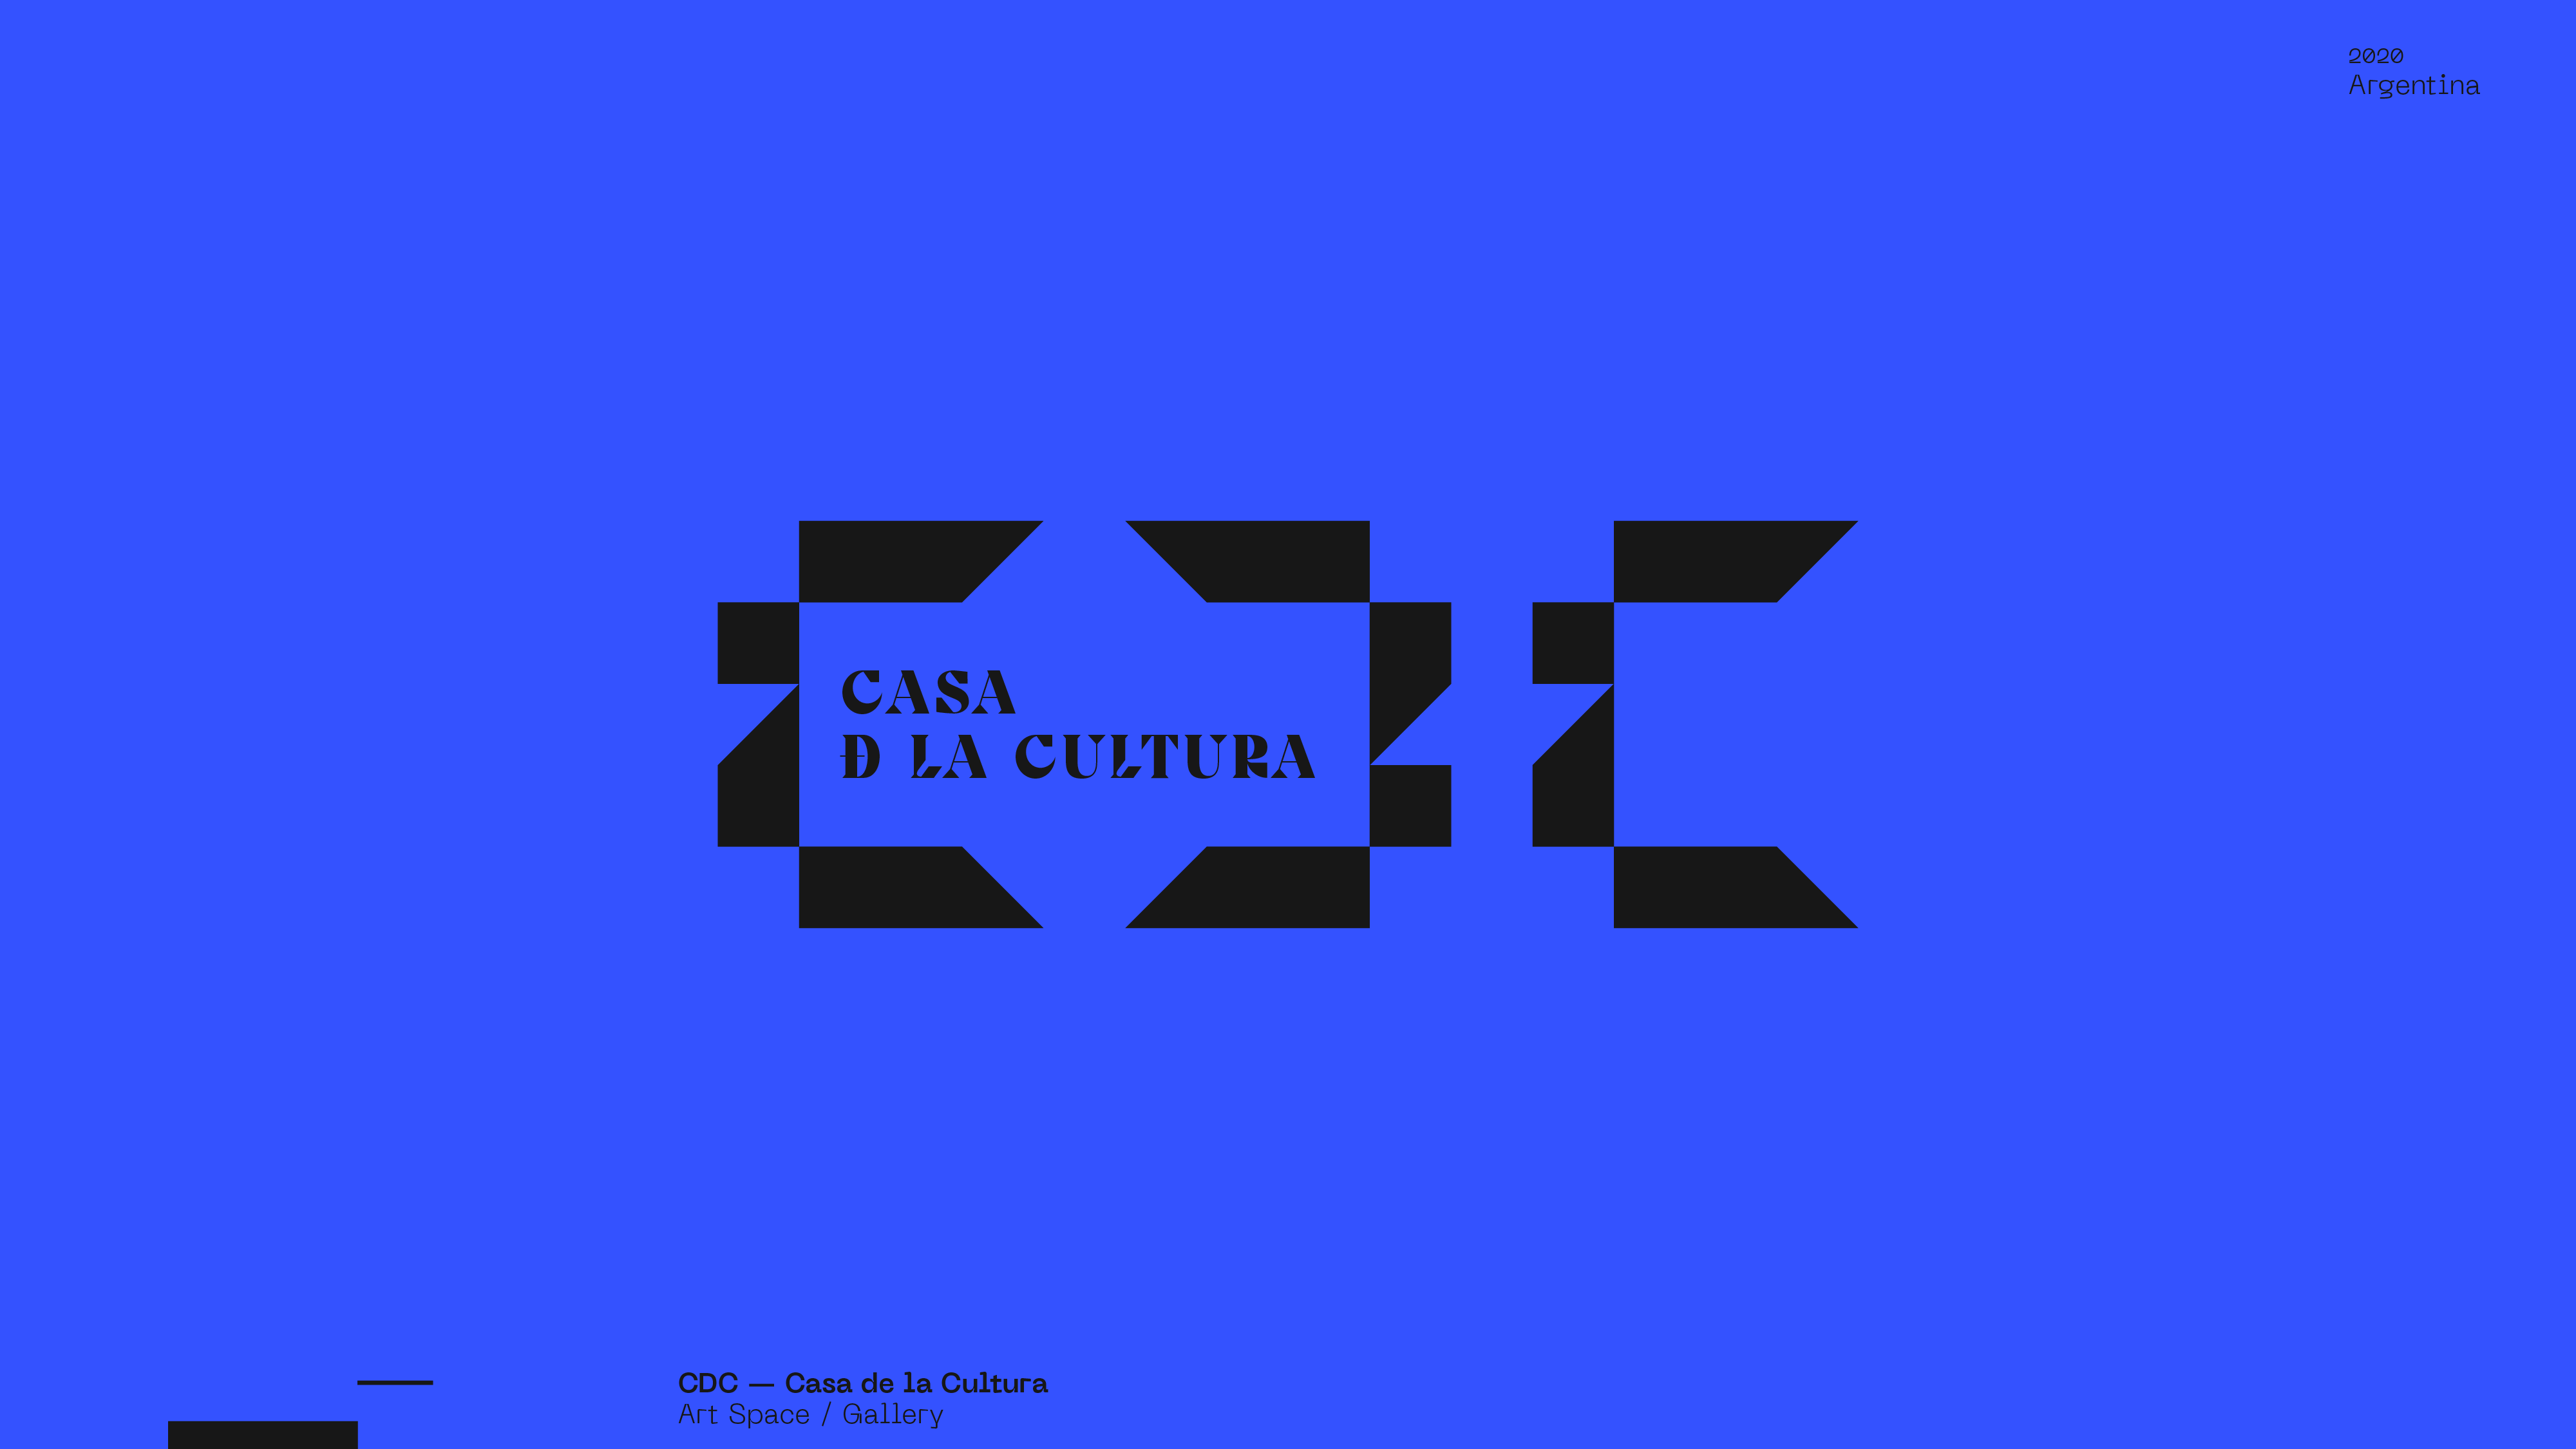 Guapo Design Studio by Esteban Ibarra Logofolio 2020 logo design — CDC